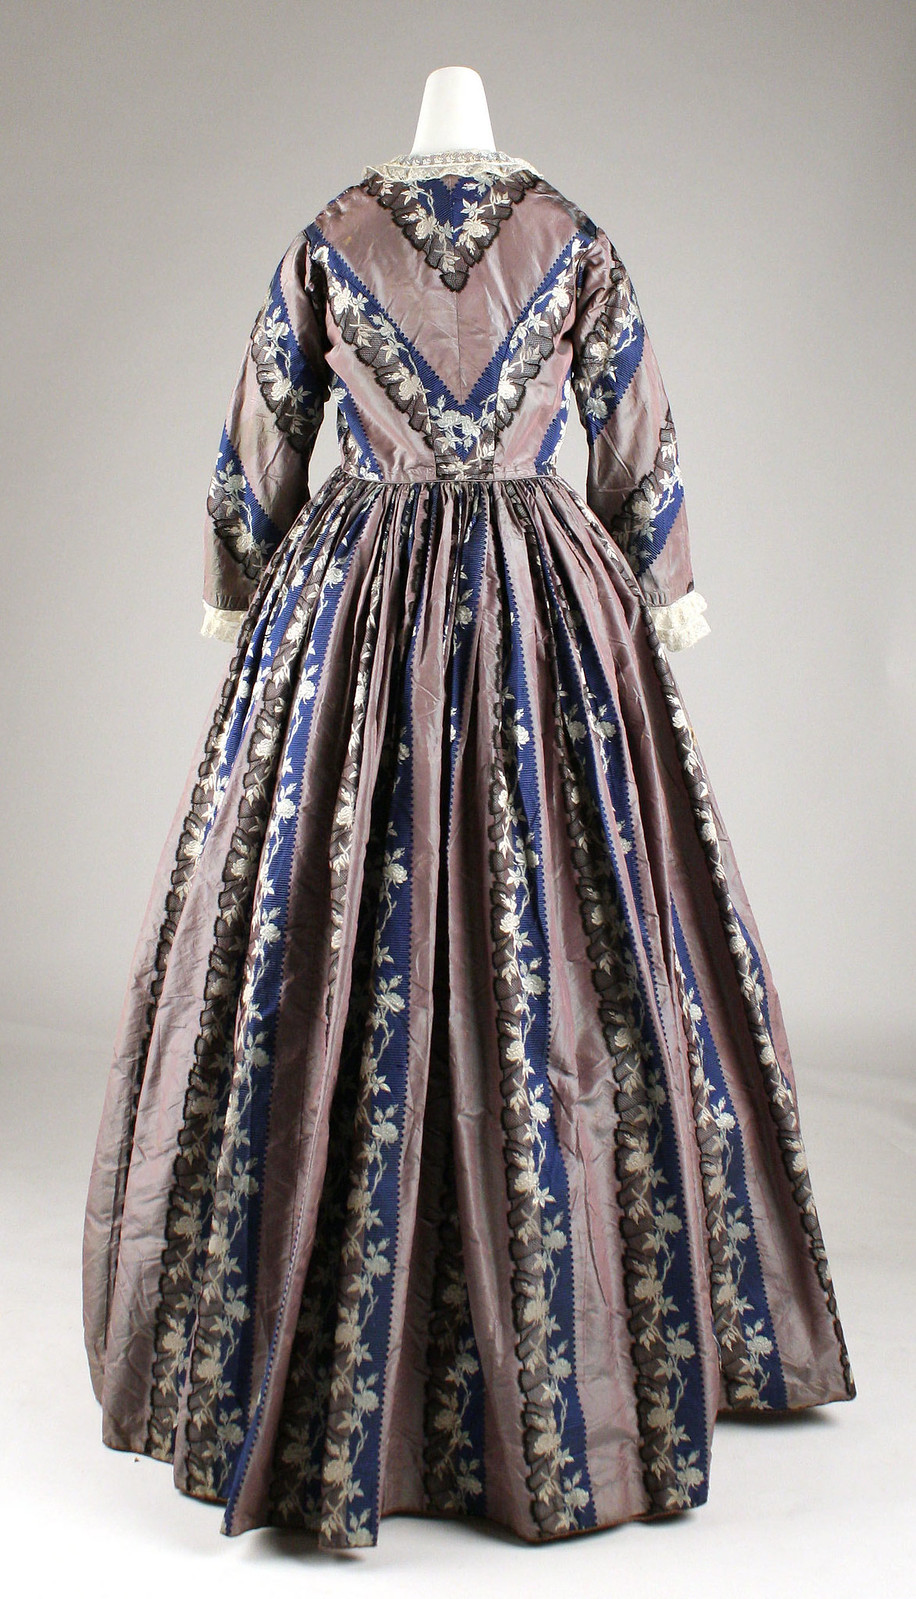 Dressing gown, c.1850, American, Silk, cotton. metmuseum